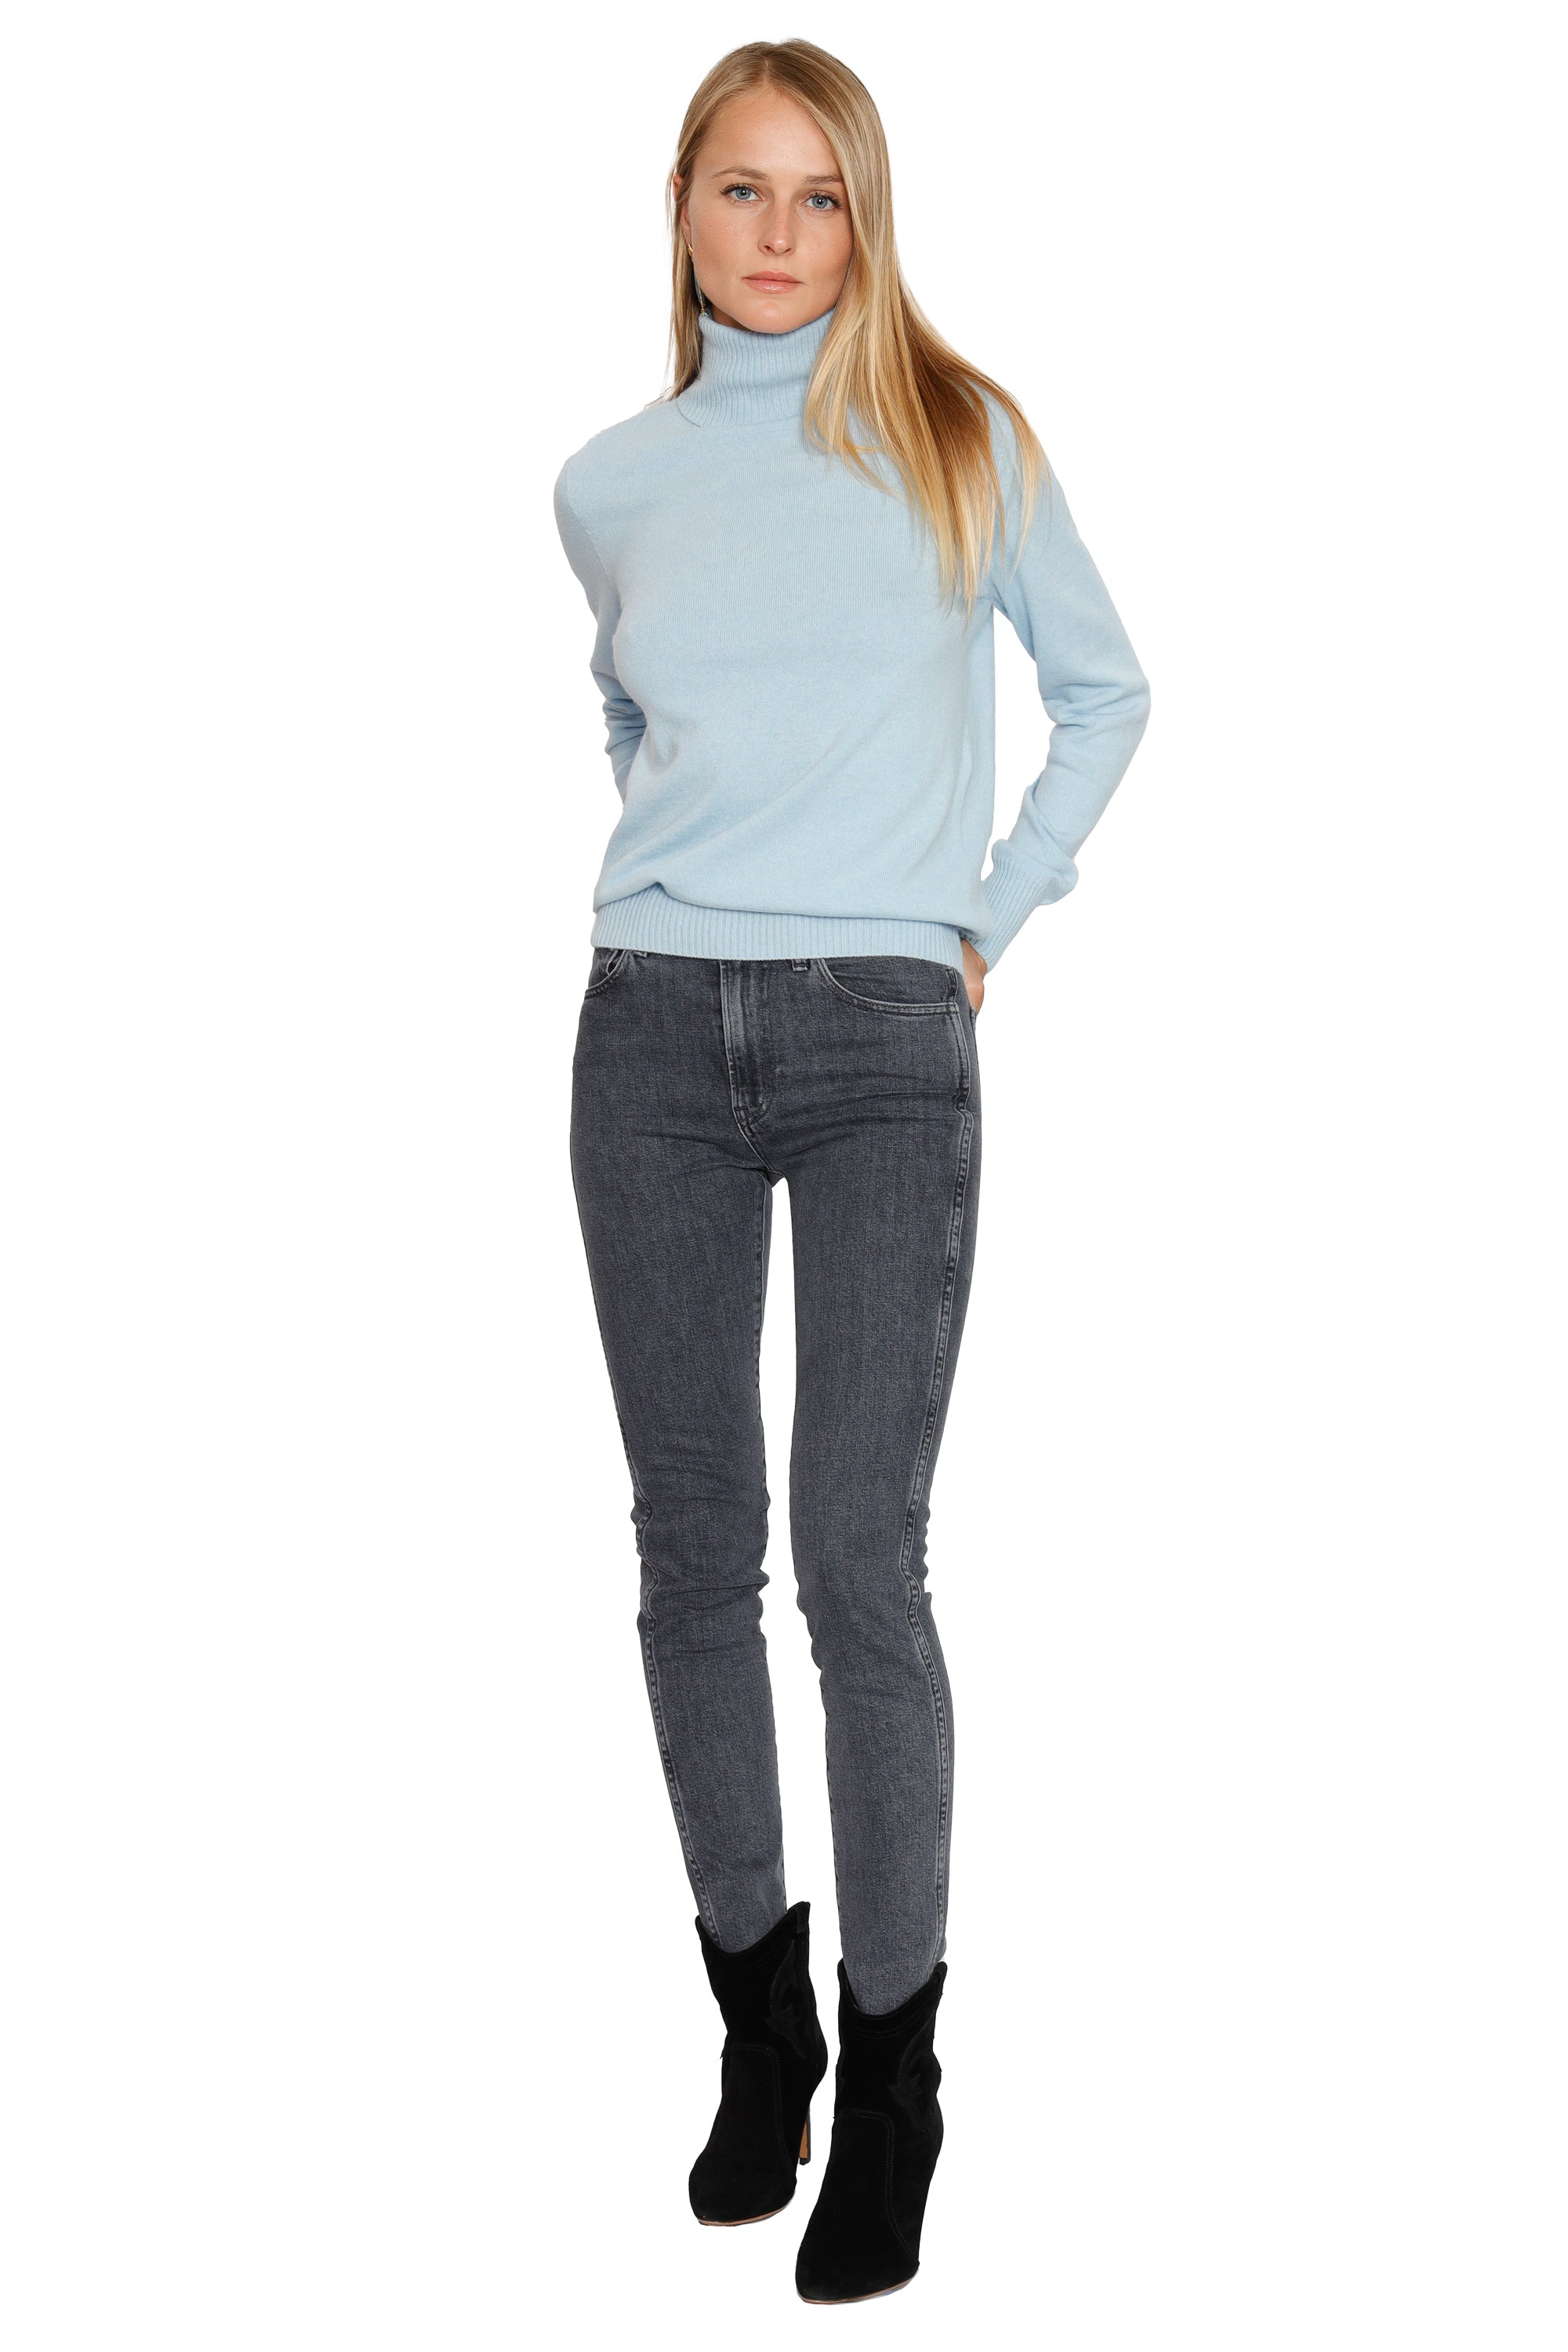 Jeans reto autêntico - 3x1